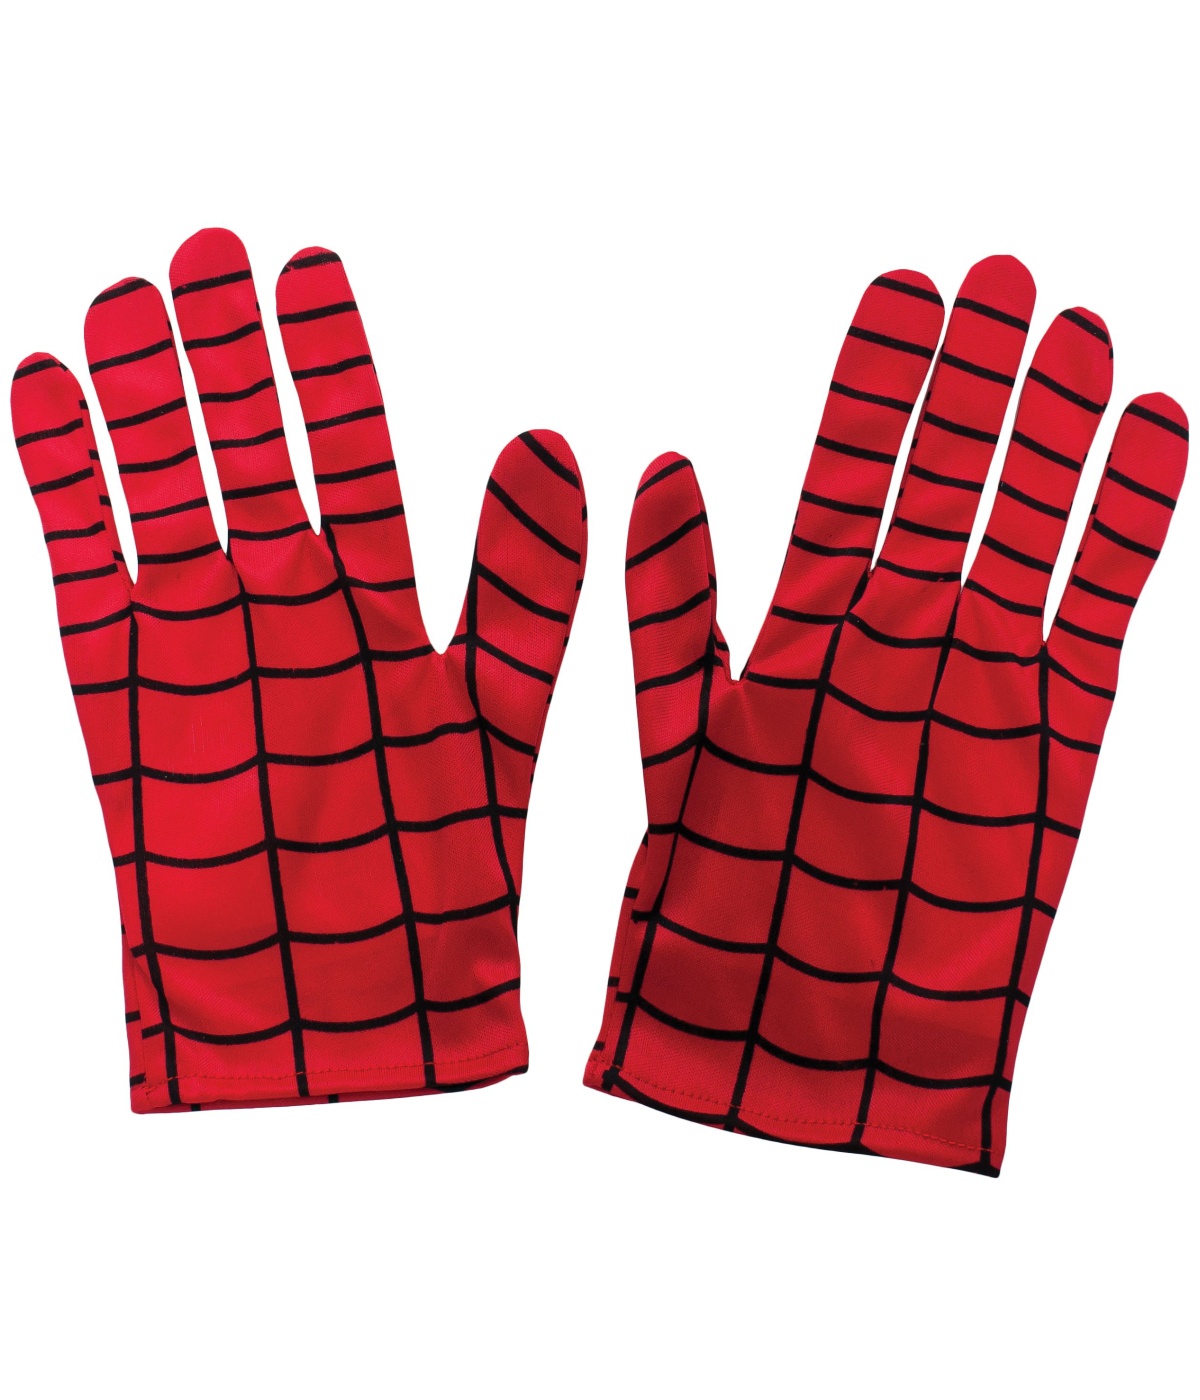  Amazing Spiderman Gloves